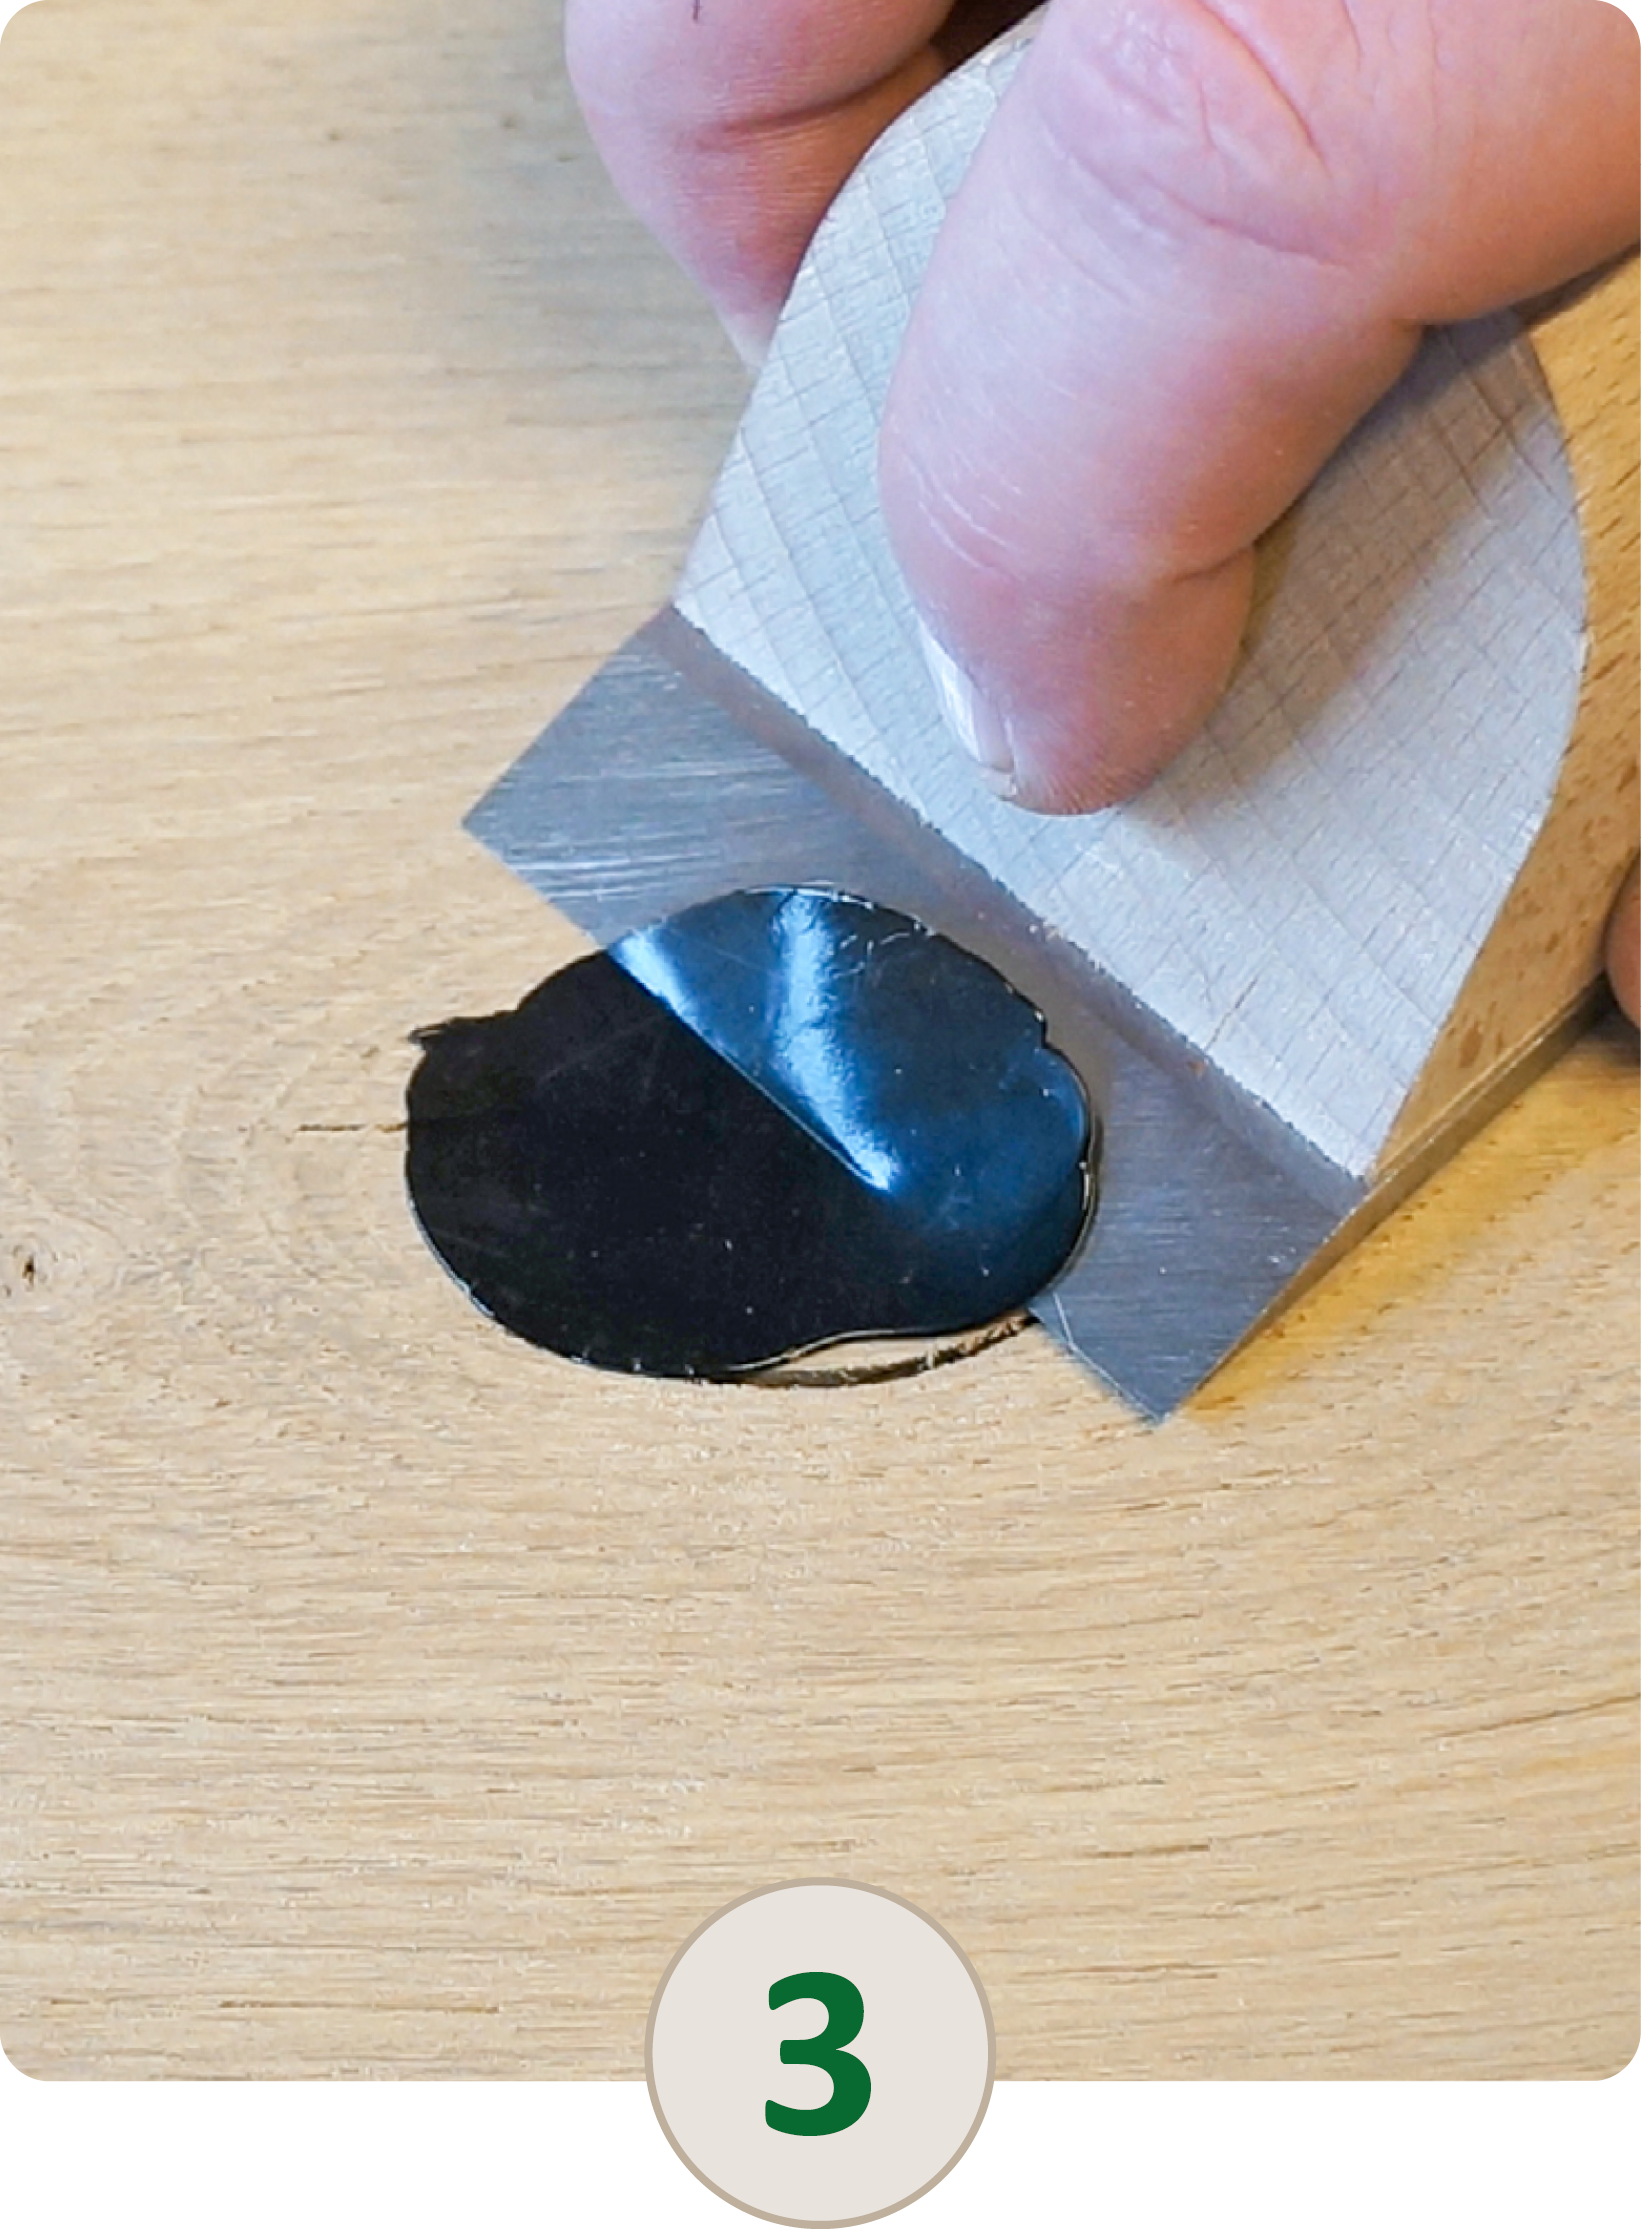 Knot Filler Basic Kit⎪Make easy wood repairs